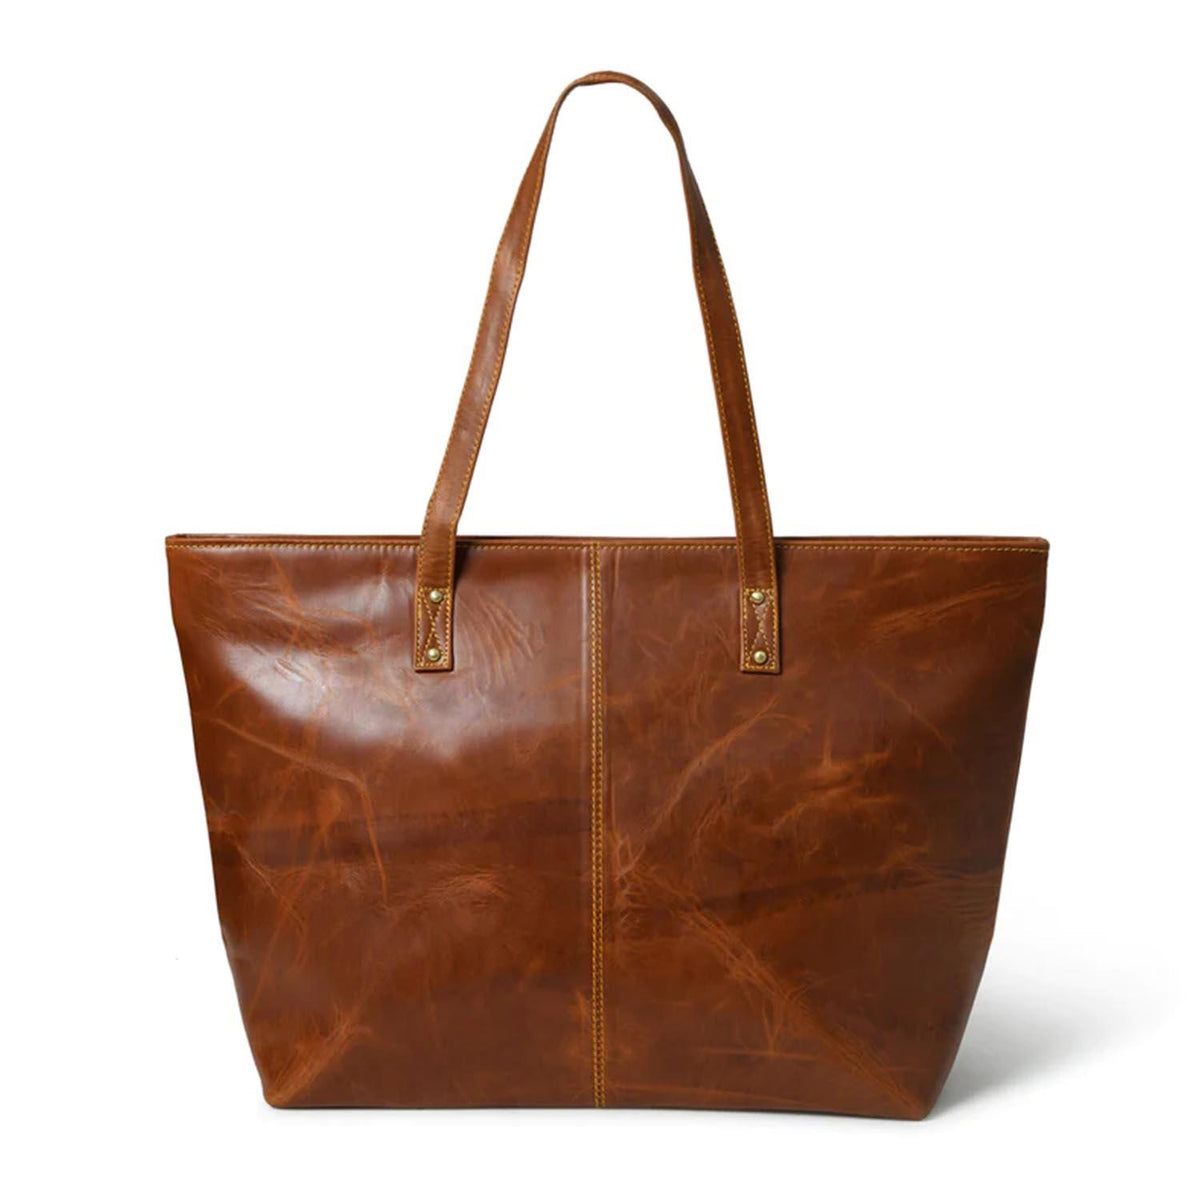 The Kim Women's Leather Tote Bag Cocoa Brown